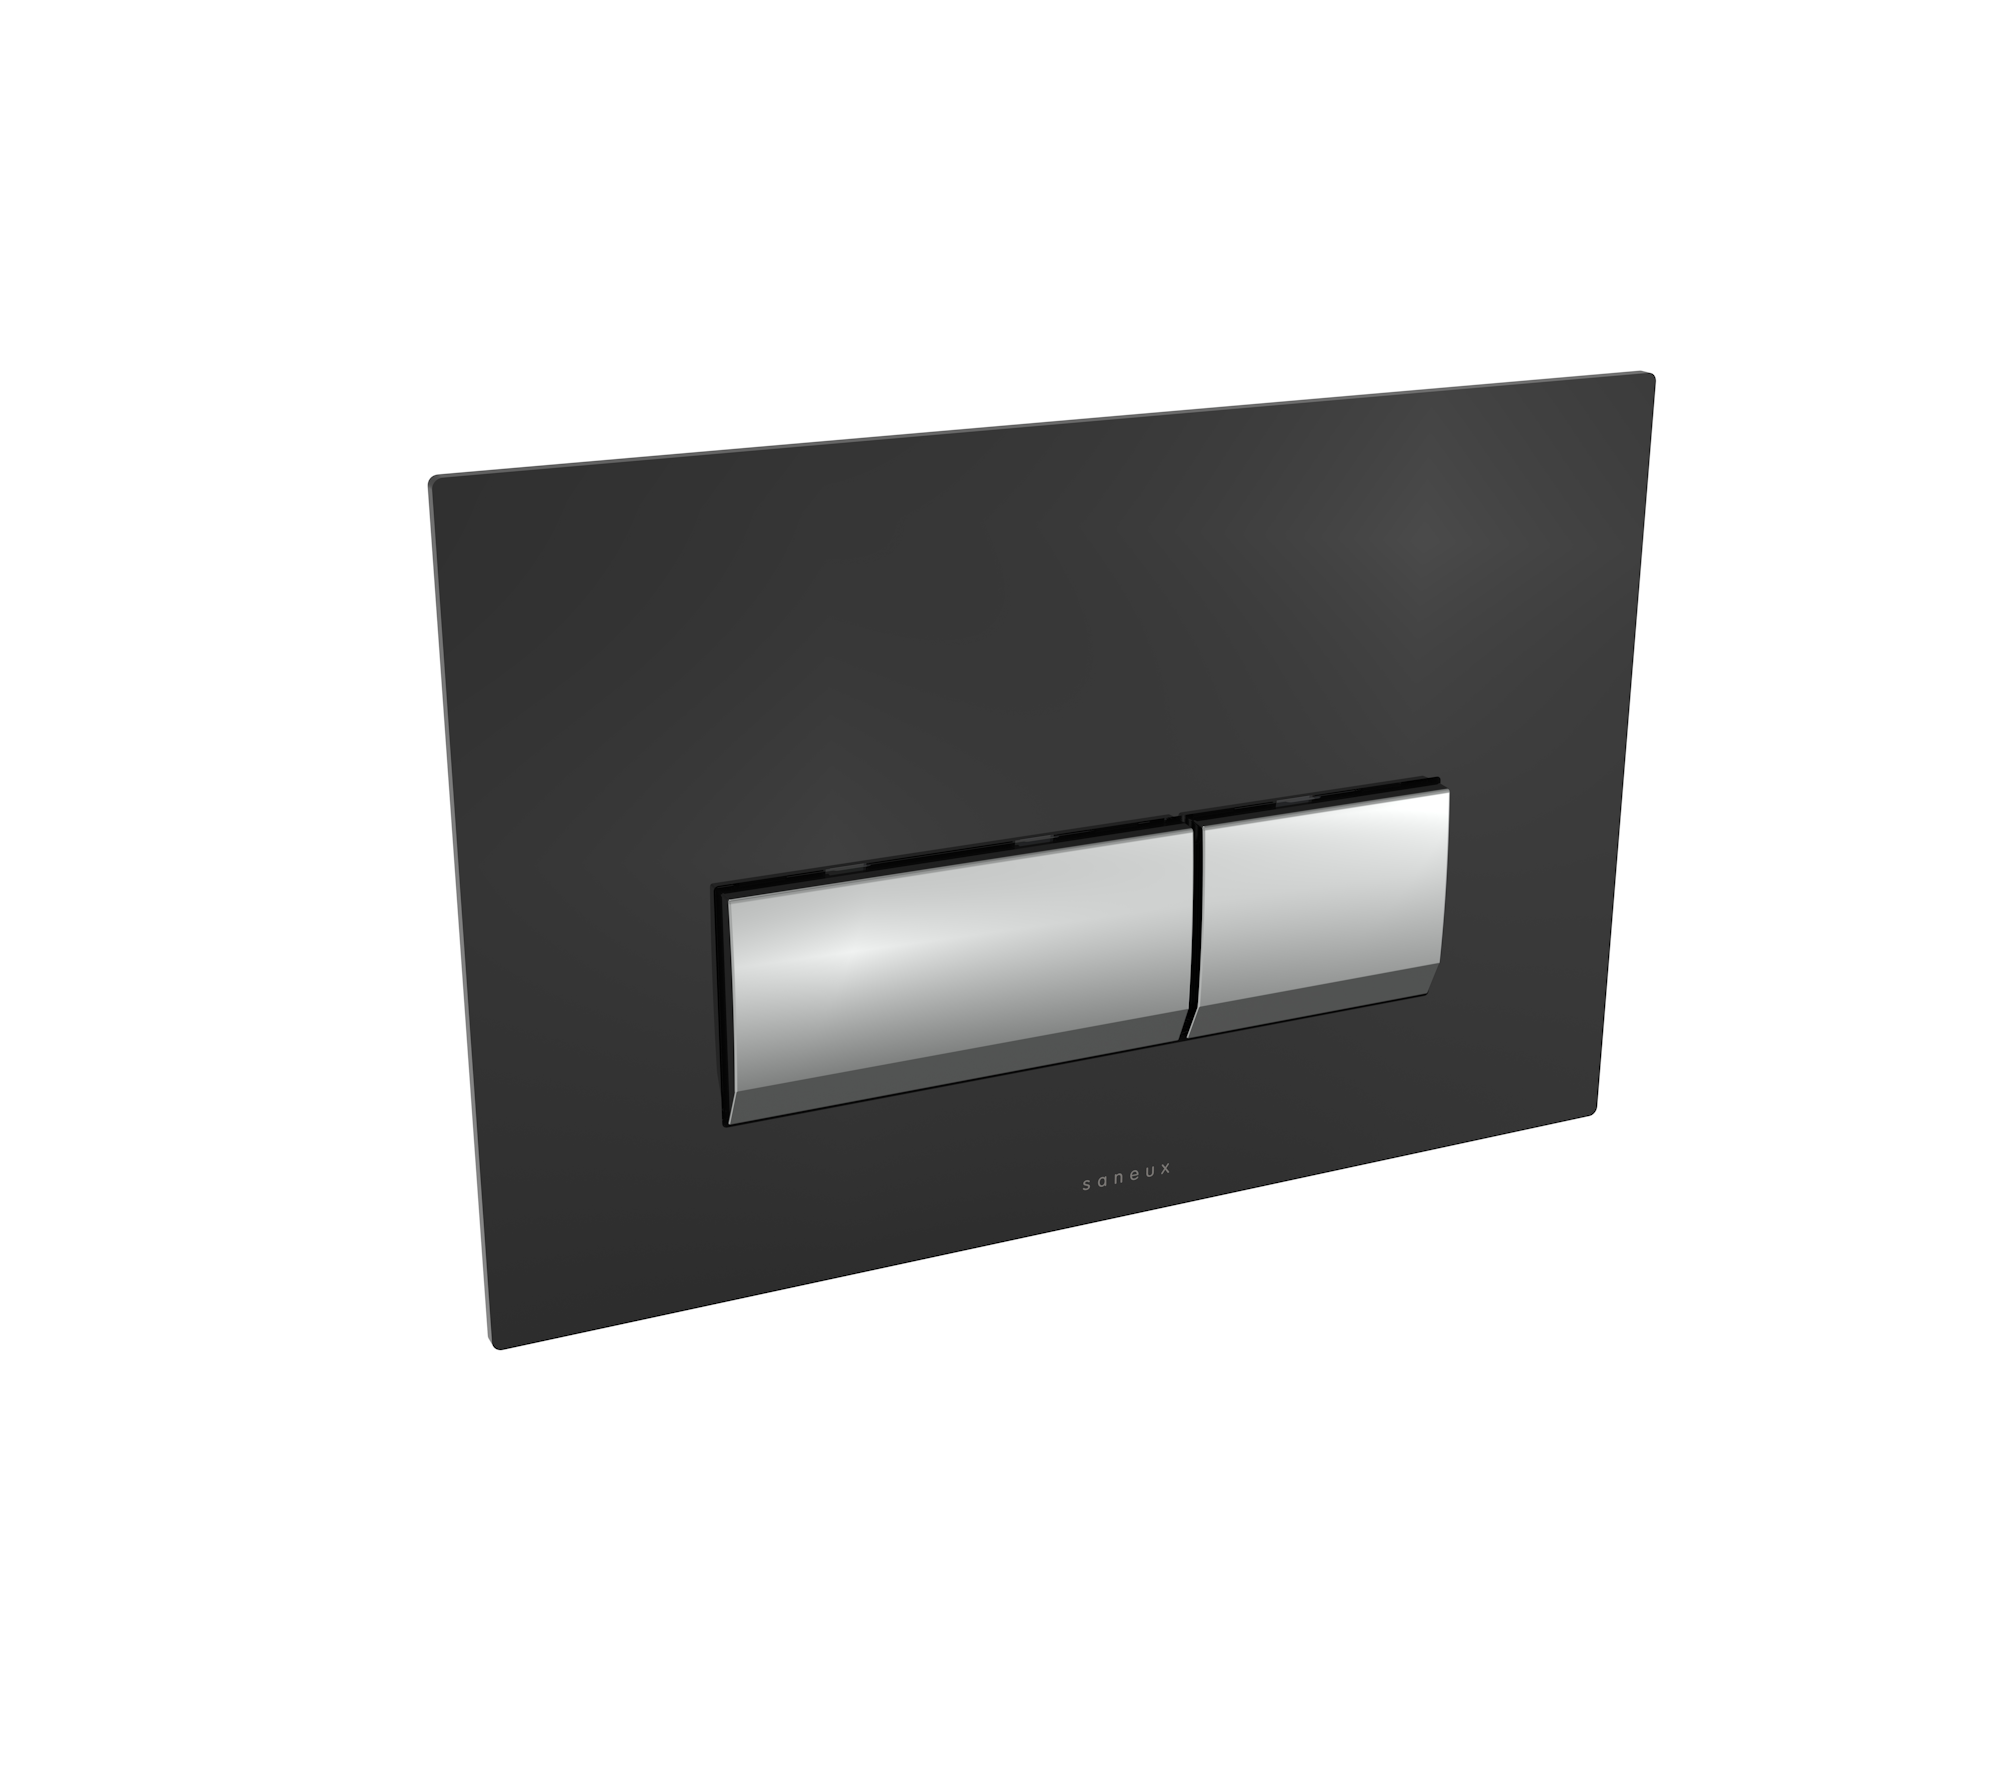 FLUSHE 2.0 square glass flush plate - Black